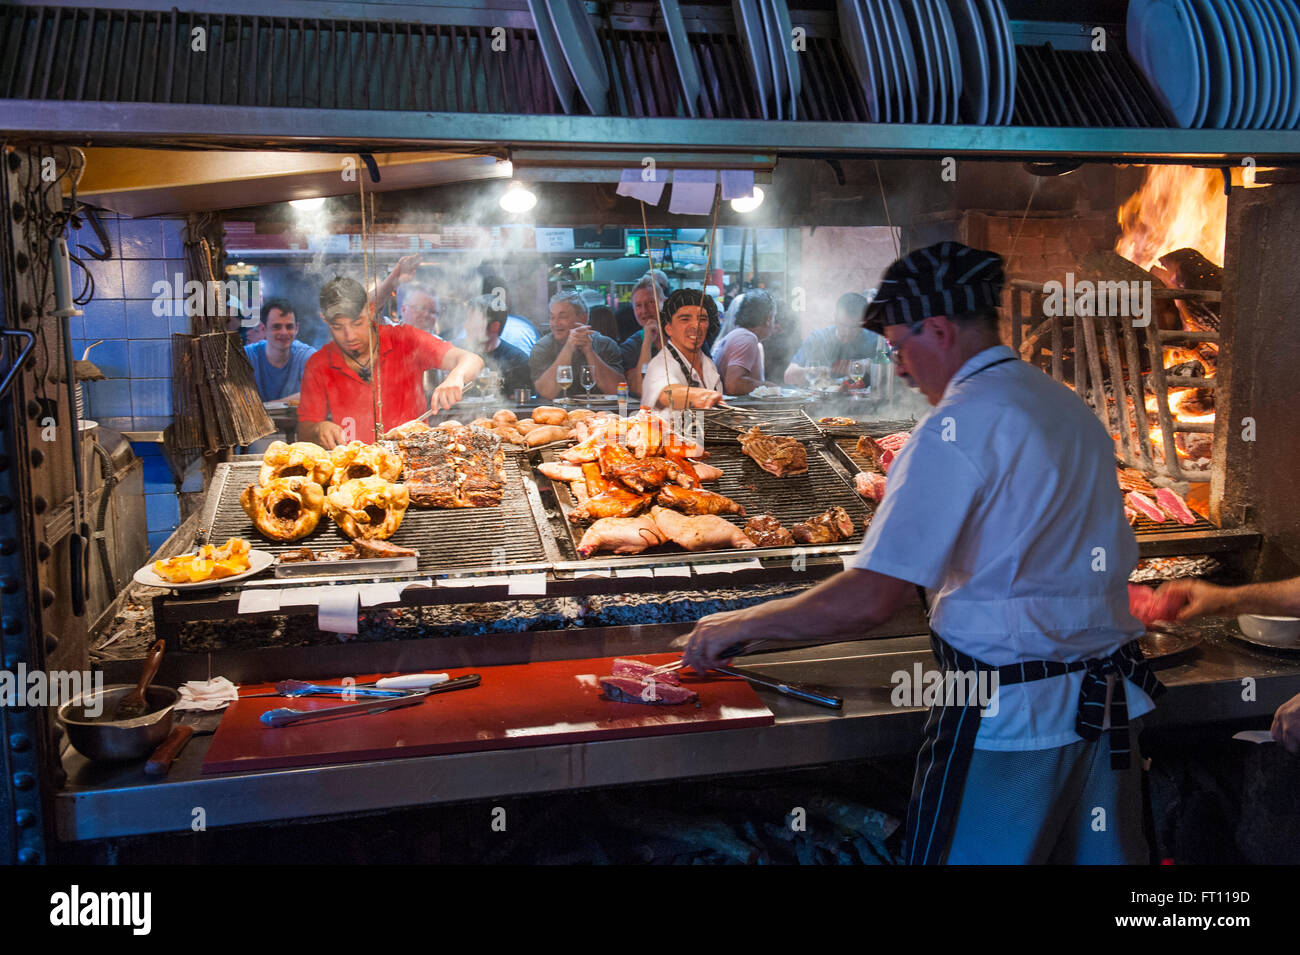 Cooks preparing steak and meat, Parilla type restaurant, Mercado del Puerto, Montevideo, Montevideo, Uruguay Stock Photo